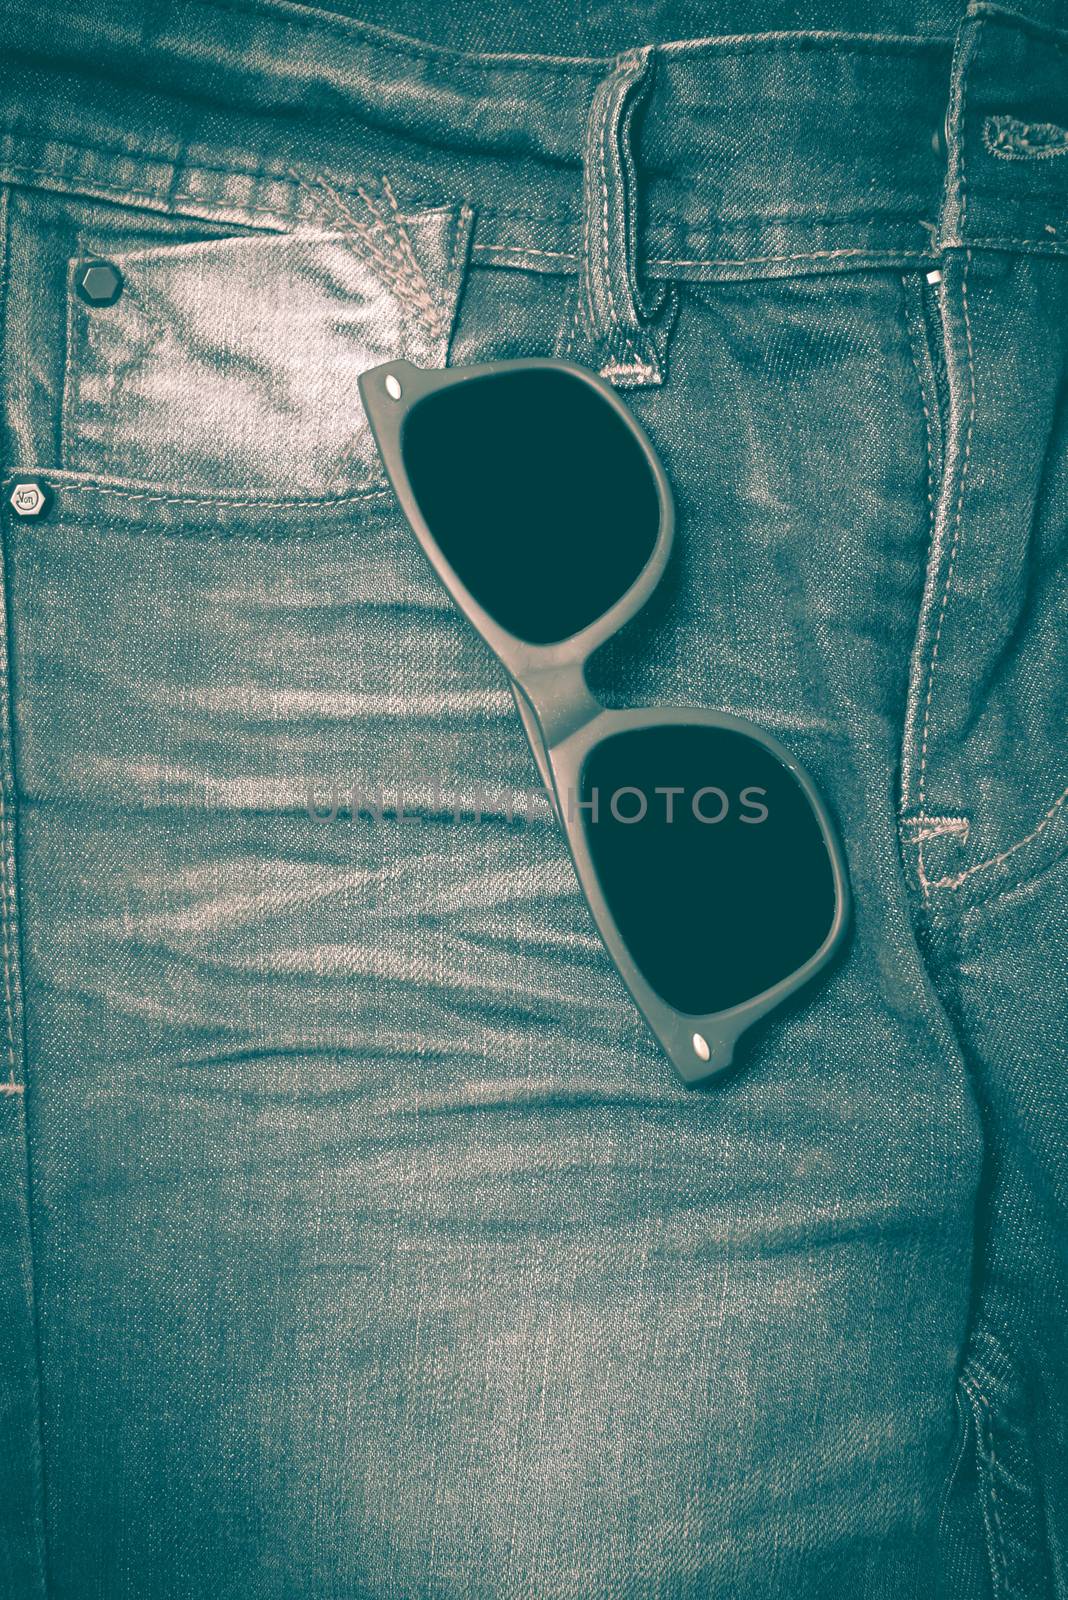 sunglasses on jean pants retro vintage style by ammza12